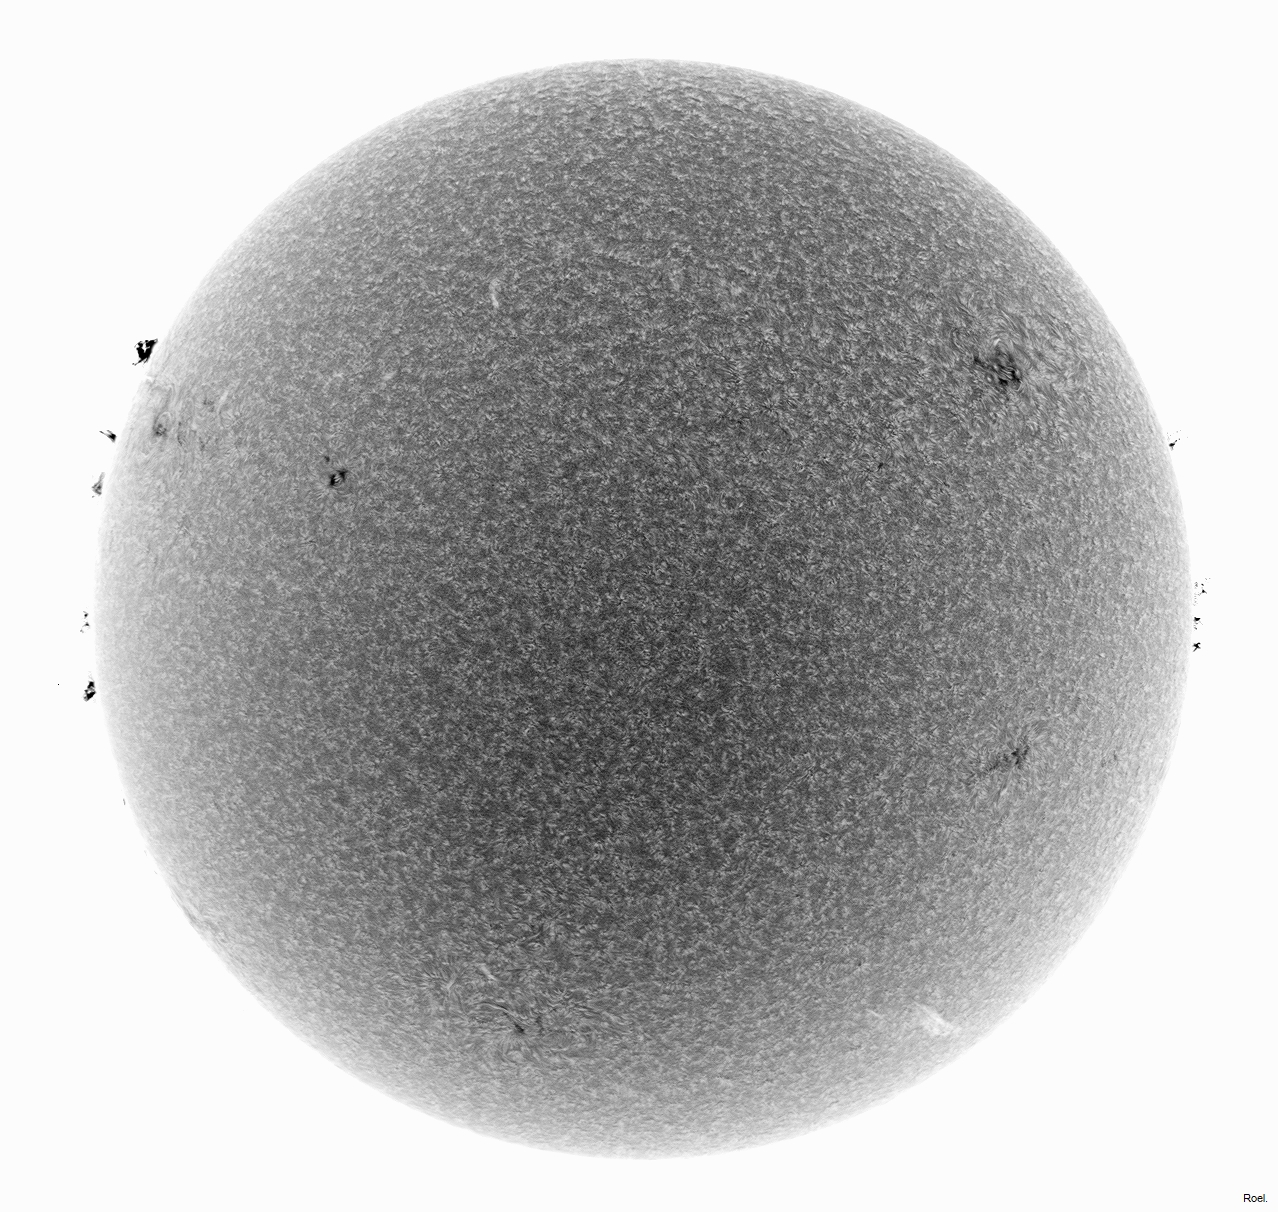 Sol del 20 de julio del 2021-Solarmax 90-DS-BF30-1neg.jpg